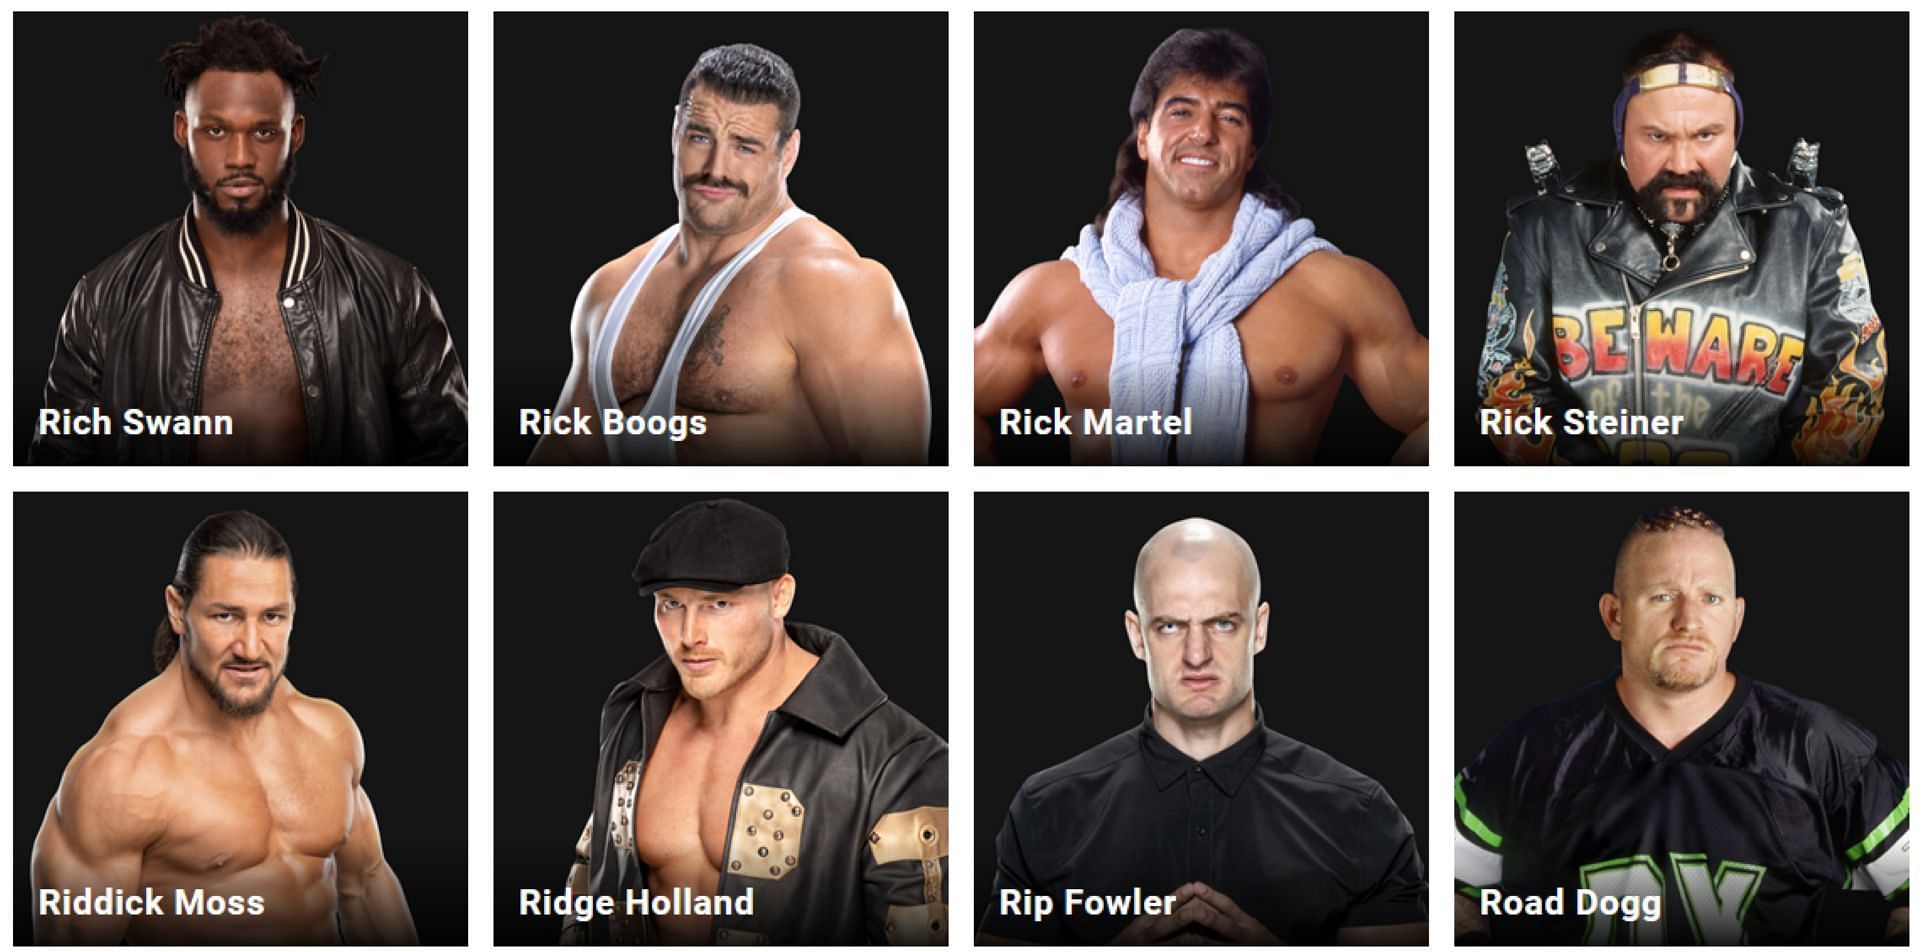 A screenshot of the WWE Superstars Alumni section shows Ridge Holland as an alumni.